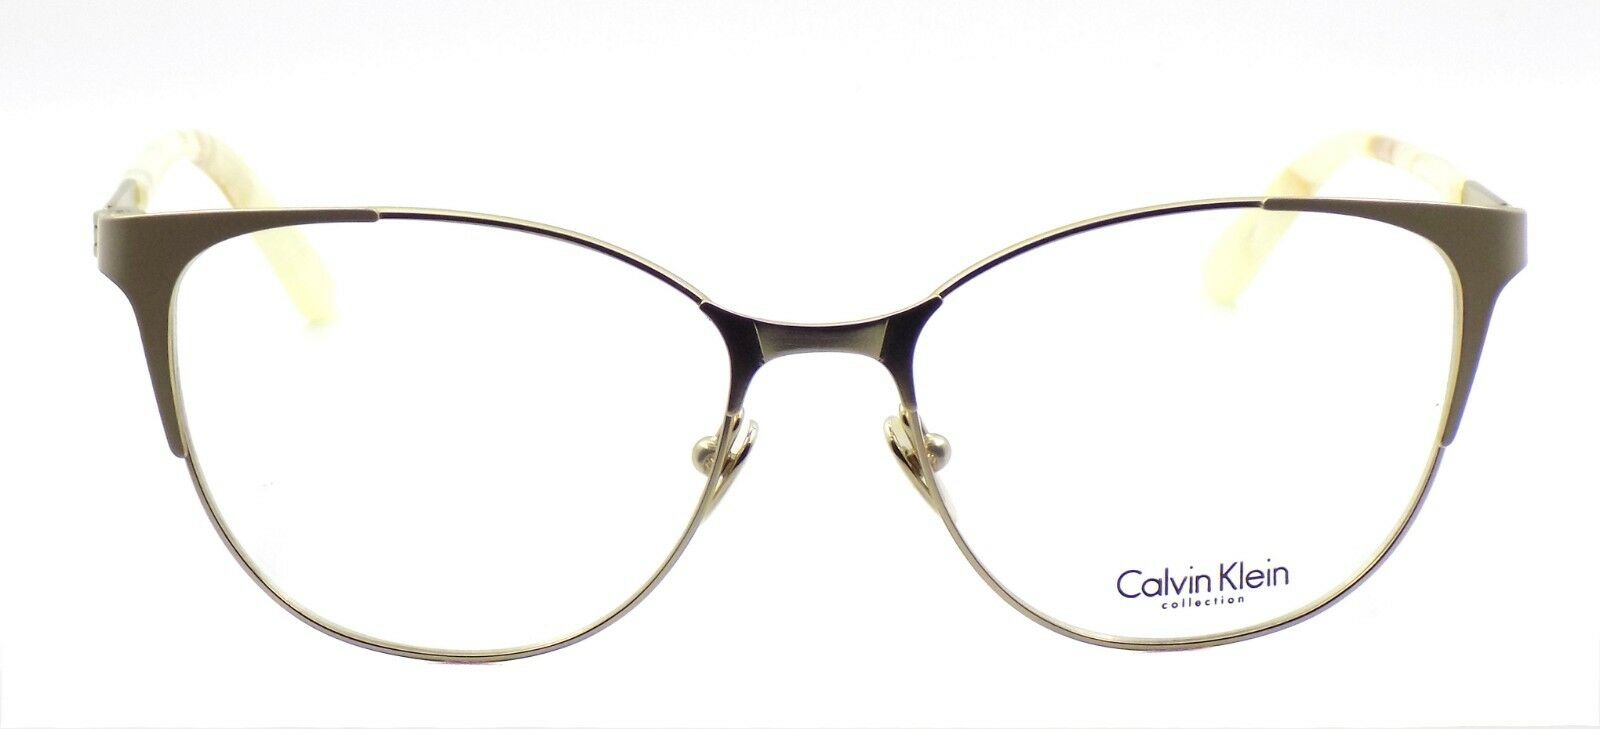 2-Calvin Klein CK8041 101 Women's Eyeglasses Frames Bone / Gold 53-16-135 + CASE-750779110683-IKSpecs